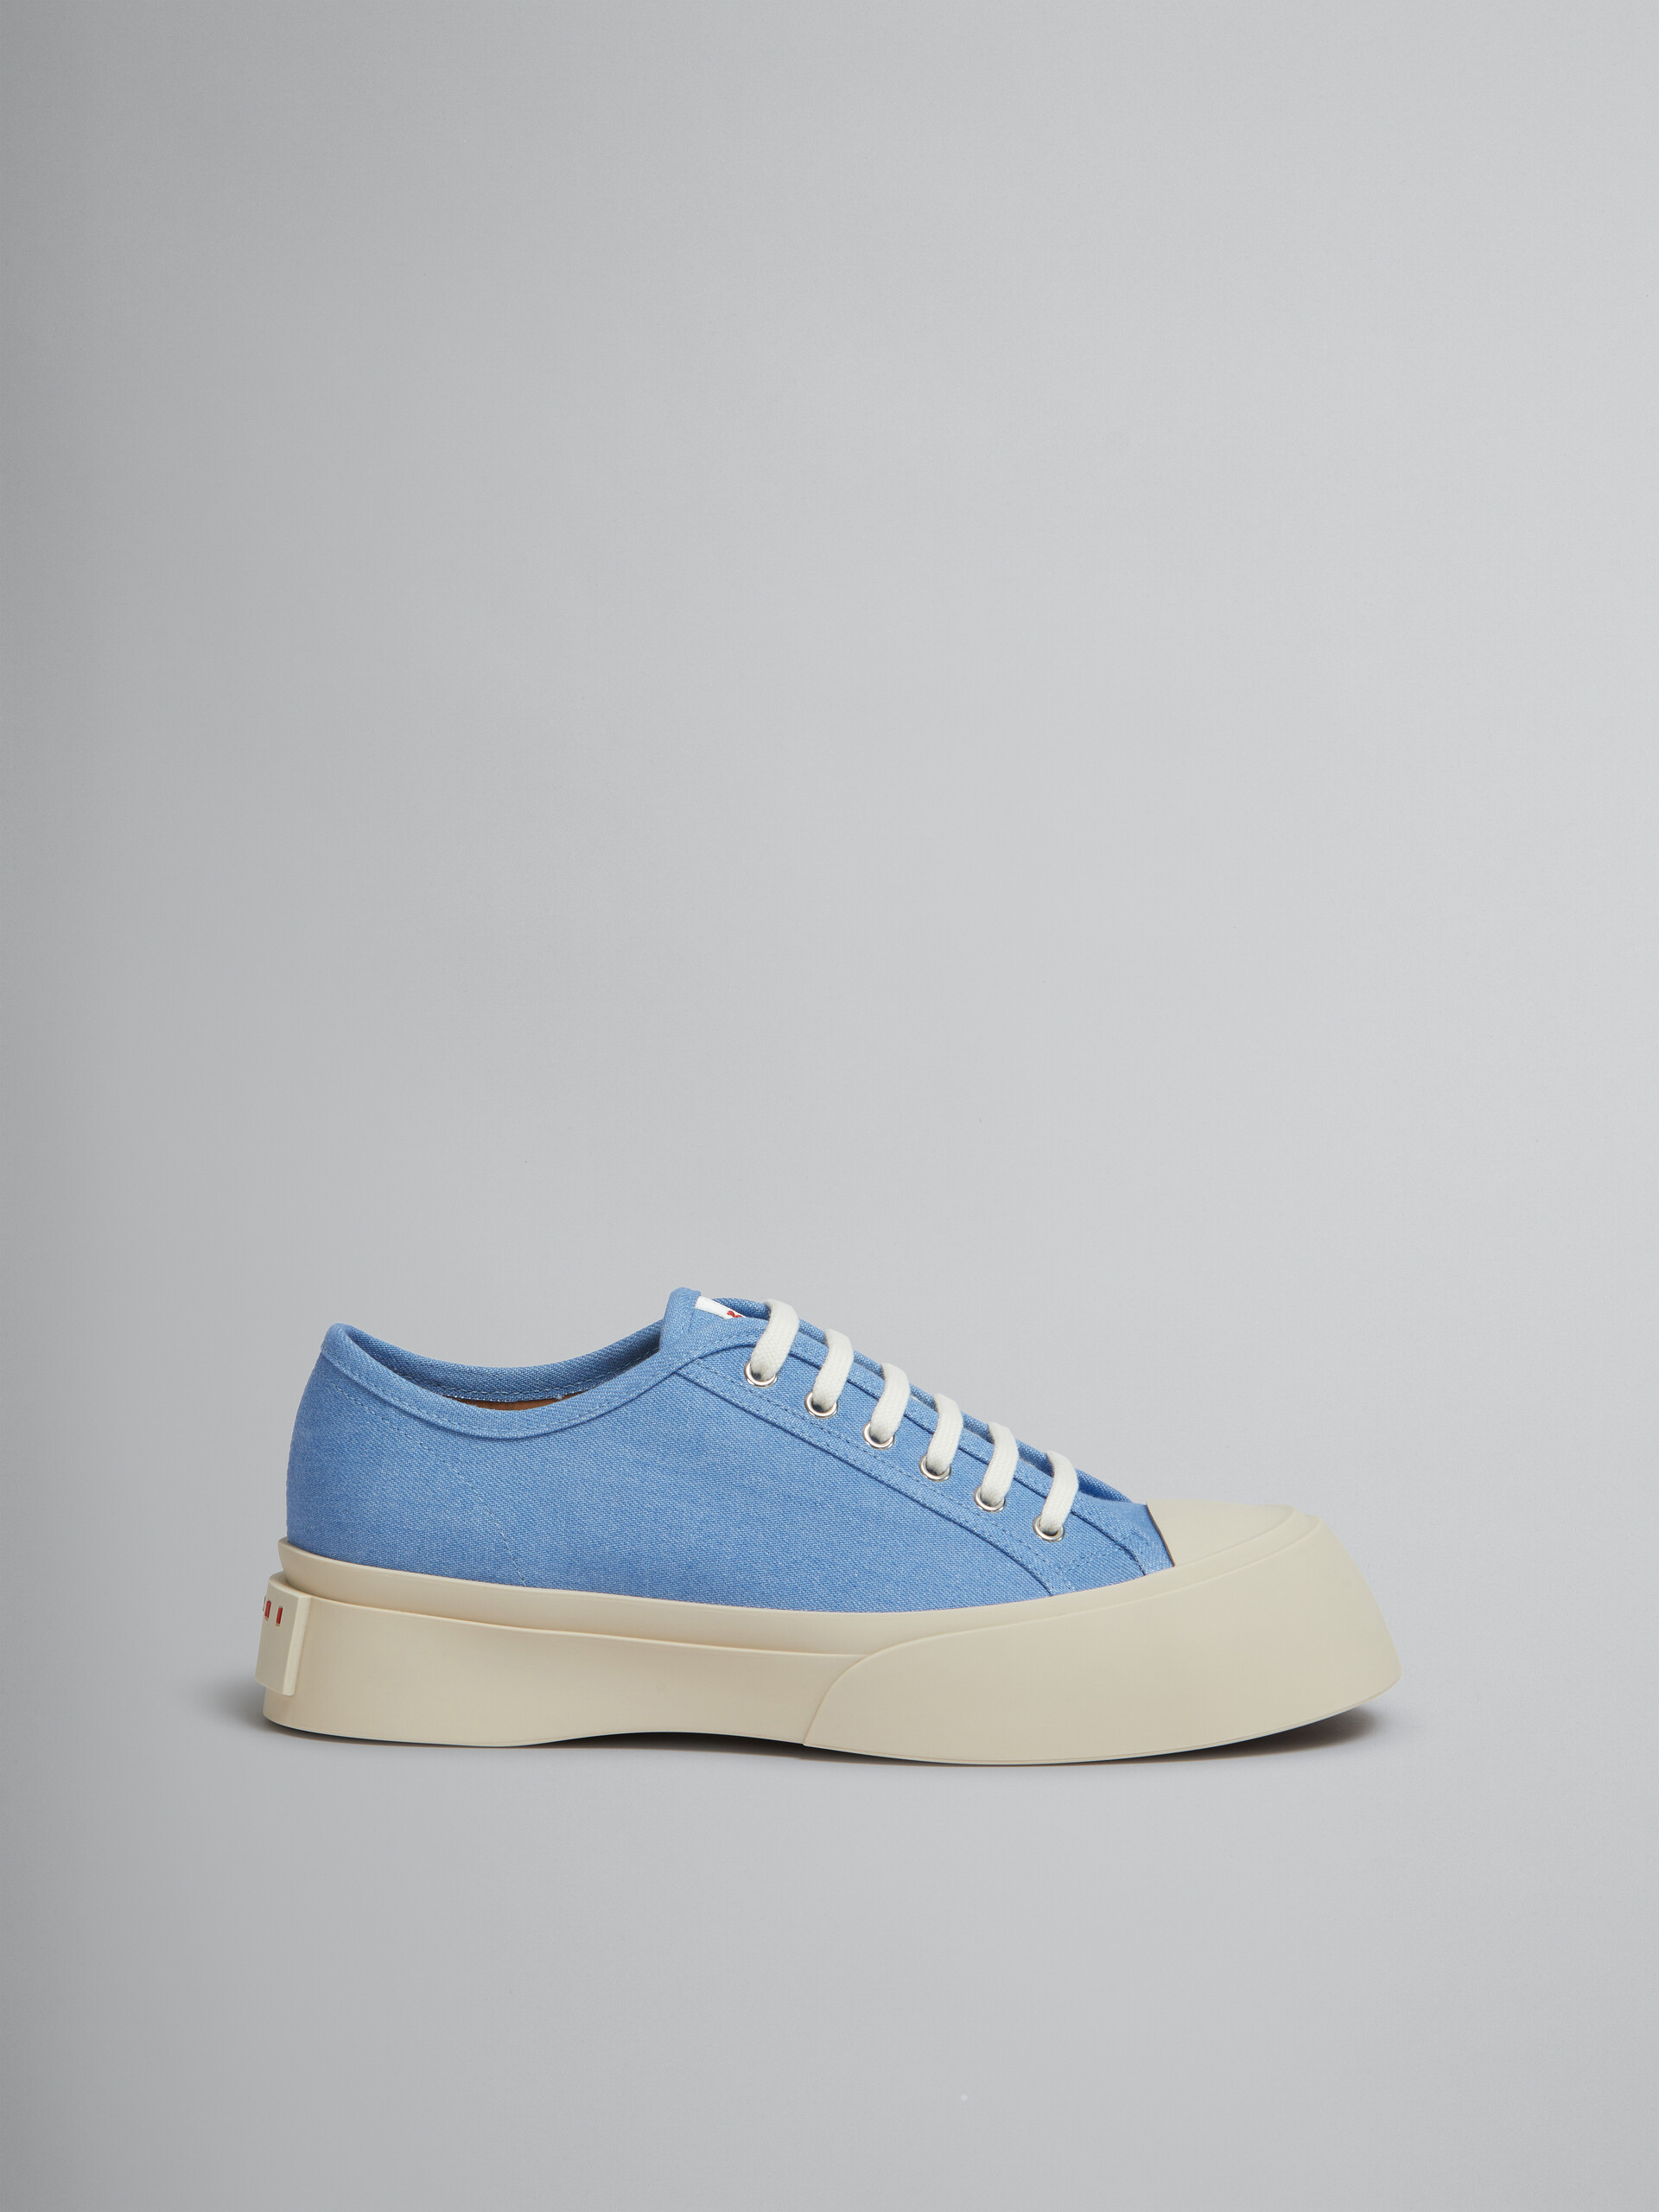 Hellblaue Sneakers Pablo aus Denim mit Schnürsenkeln - Sneakers - Image 1